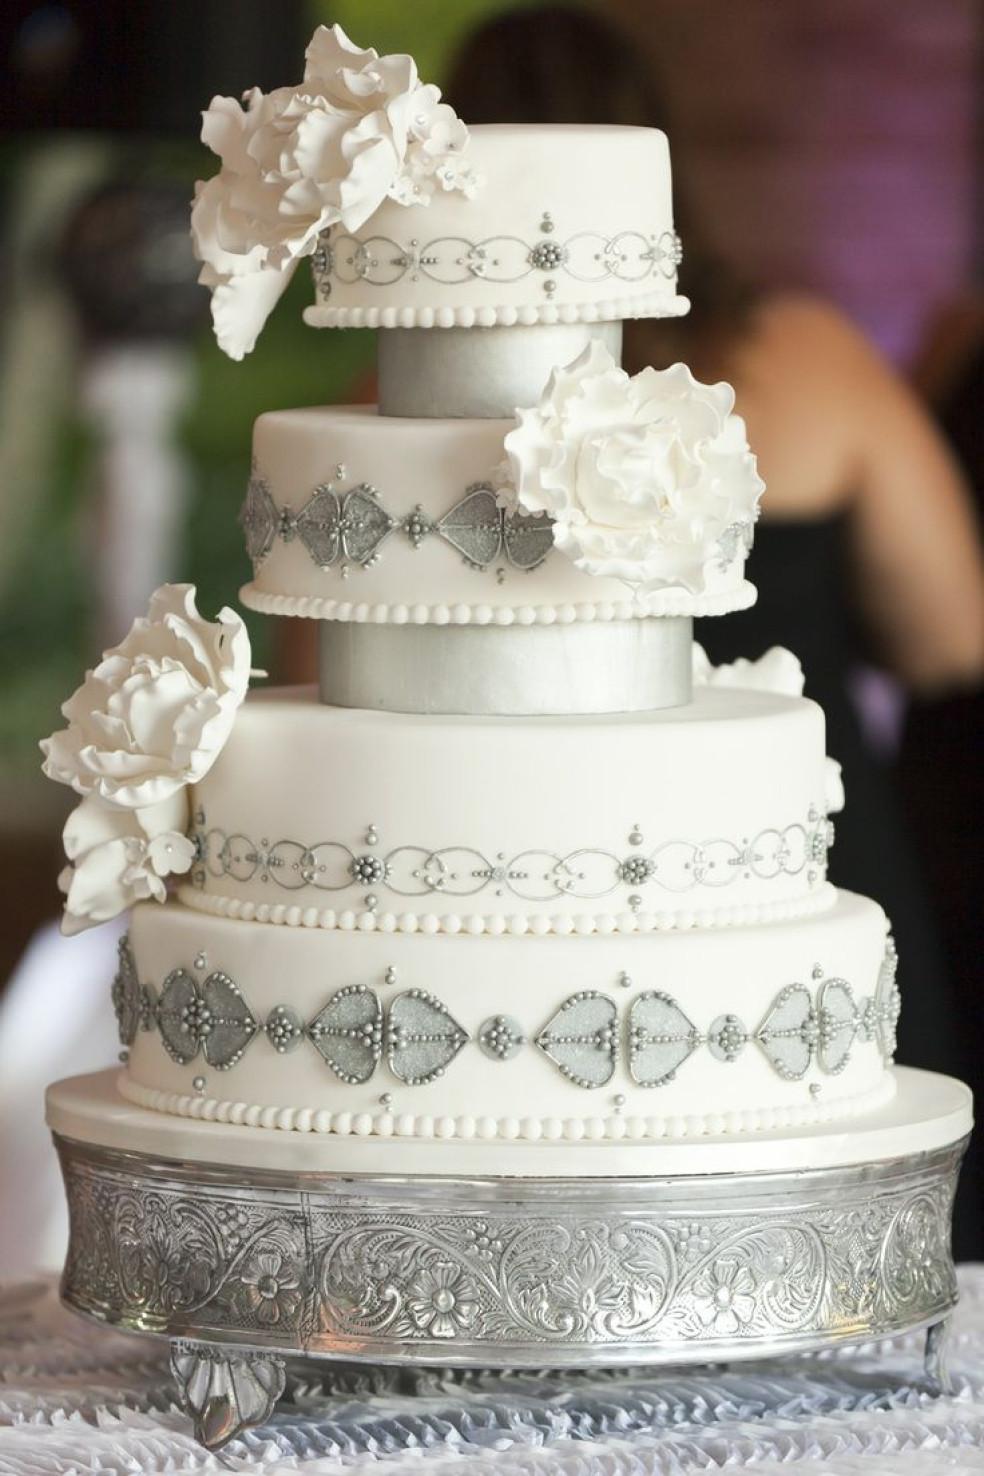 Svadobné torty